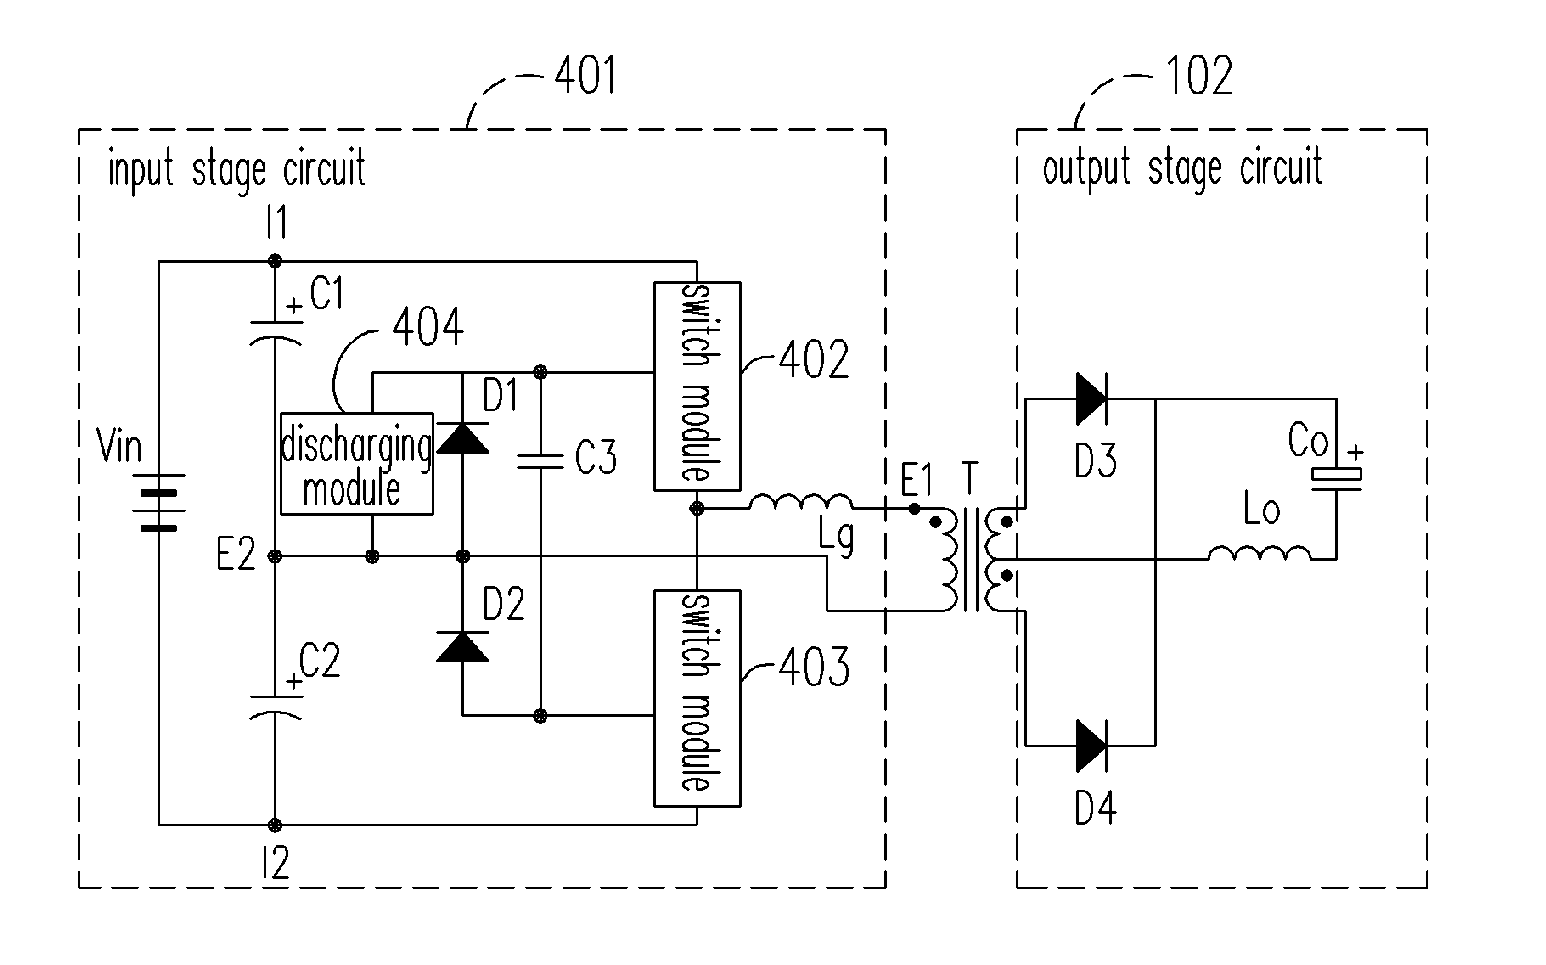 Input stage circuit of three-level DC/DC converter